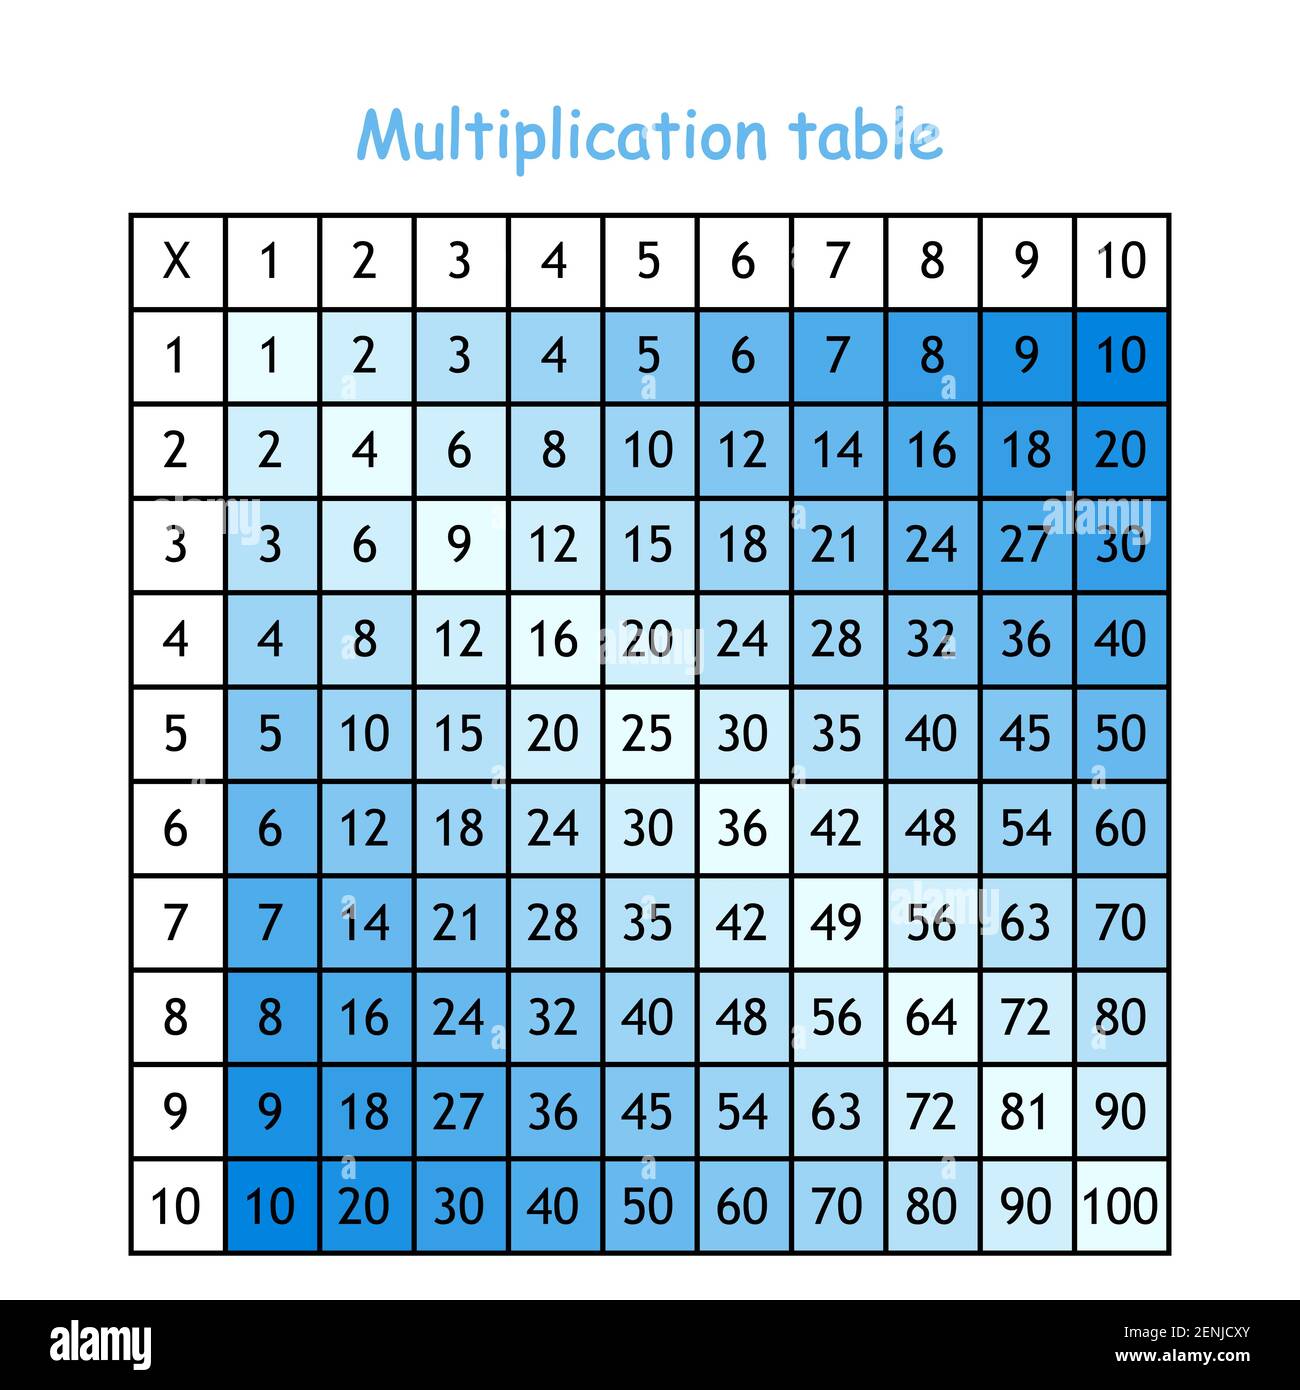 light blue background multiplication table card 